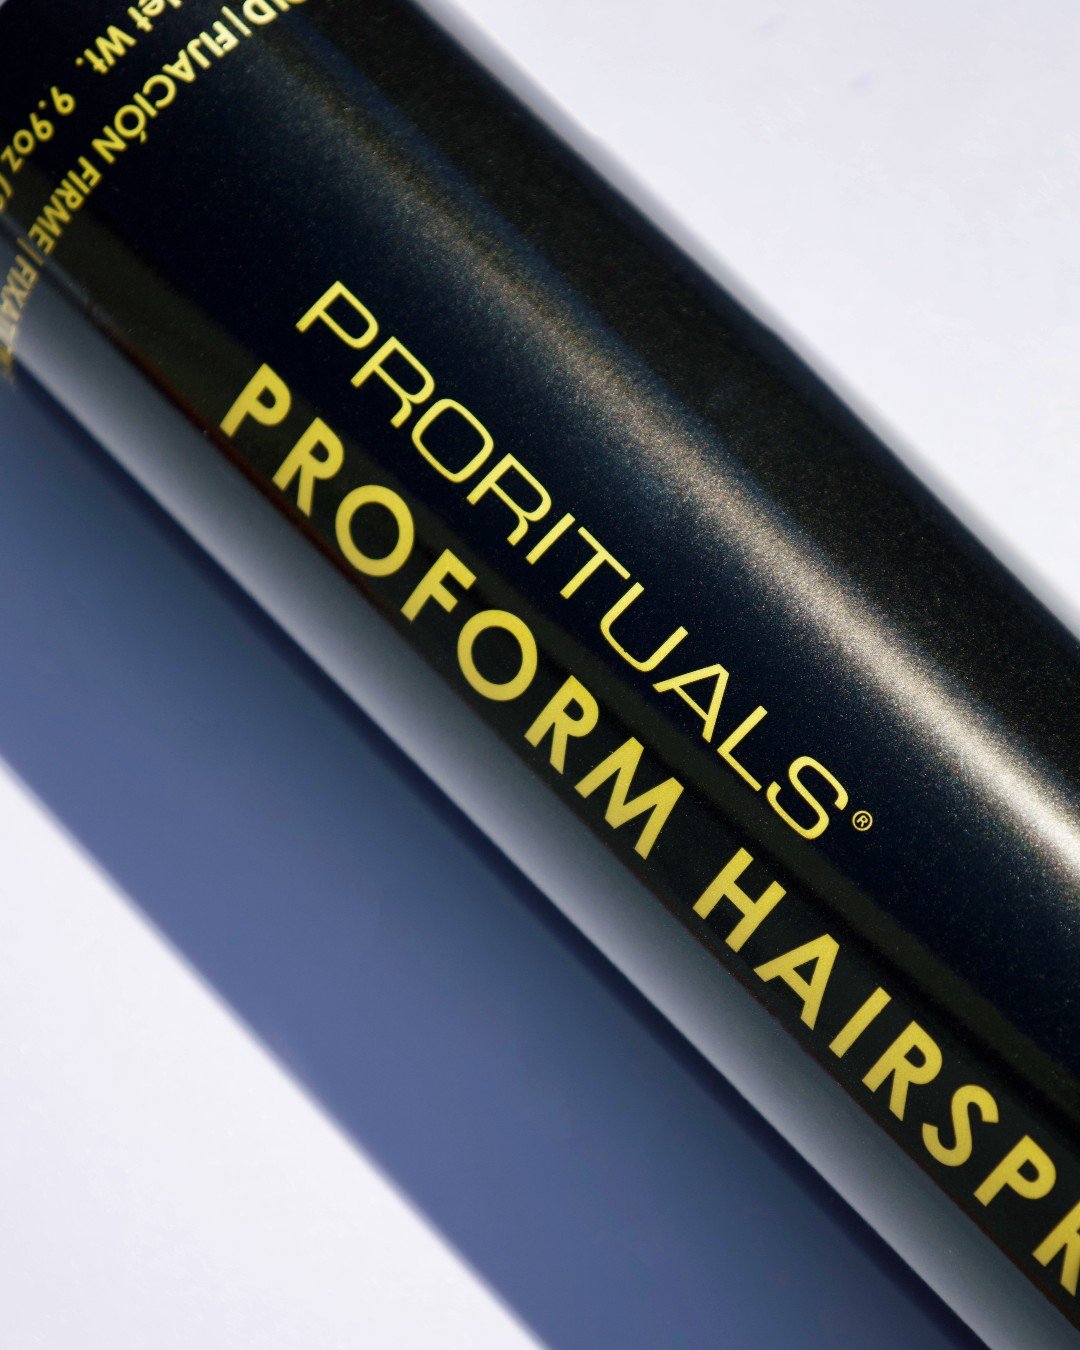 Prorituals Proform Hairspray